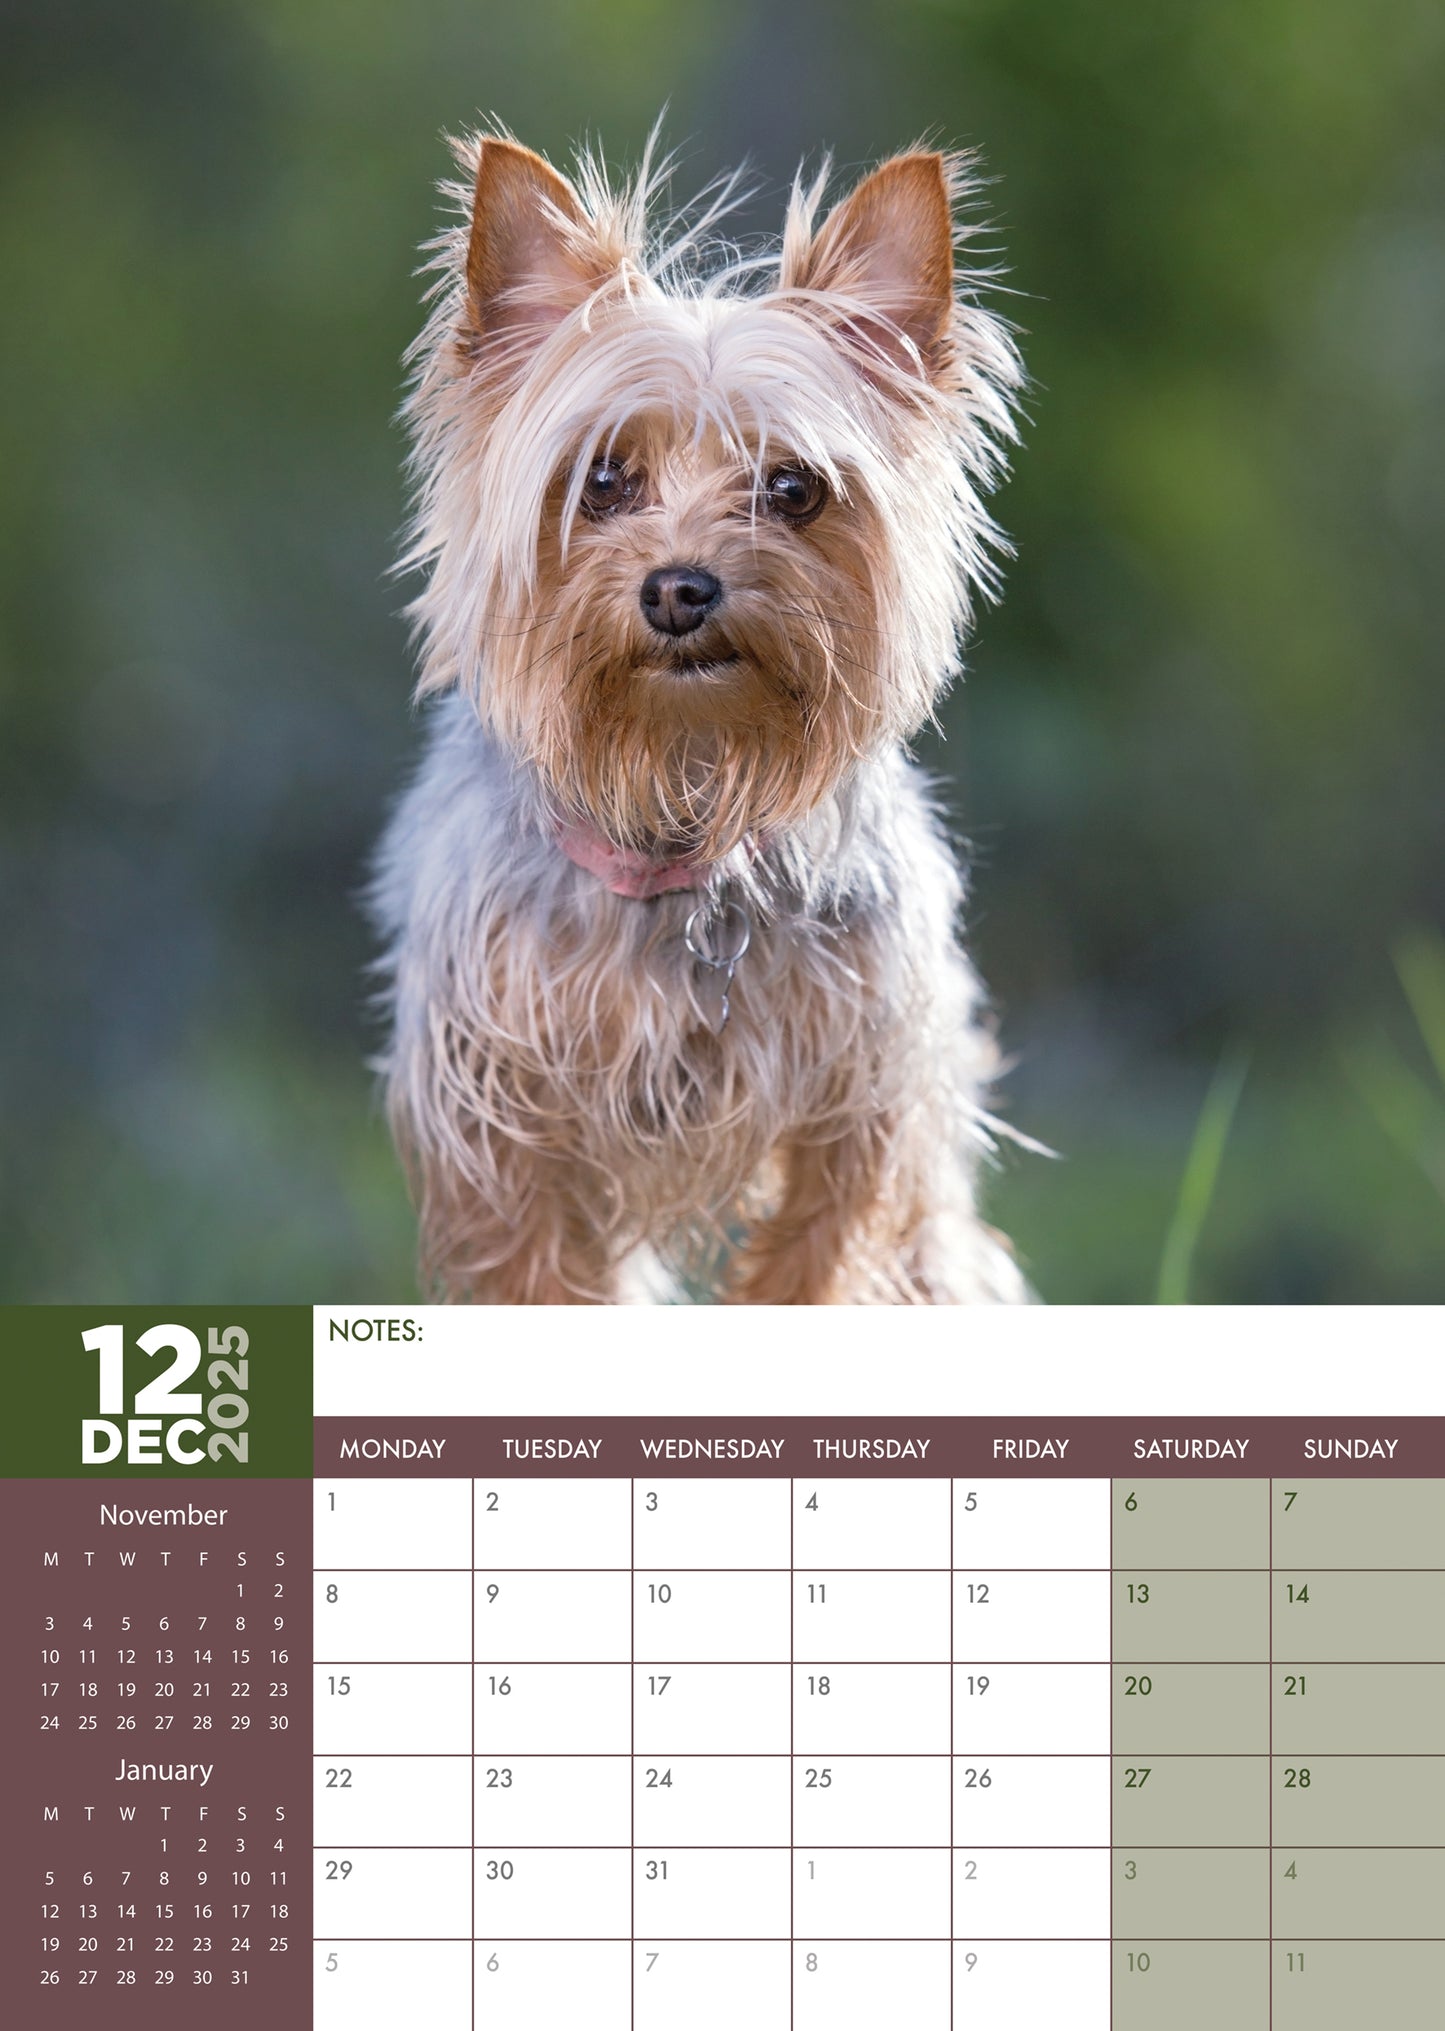 Yorkshire Terrier Calendar 2025